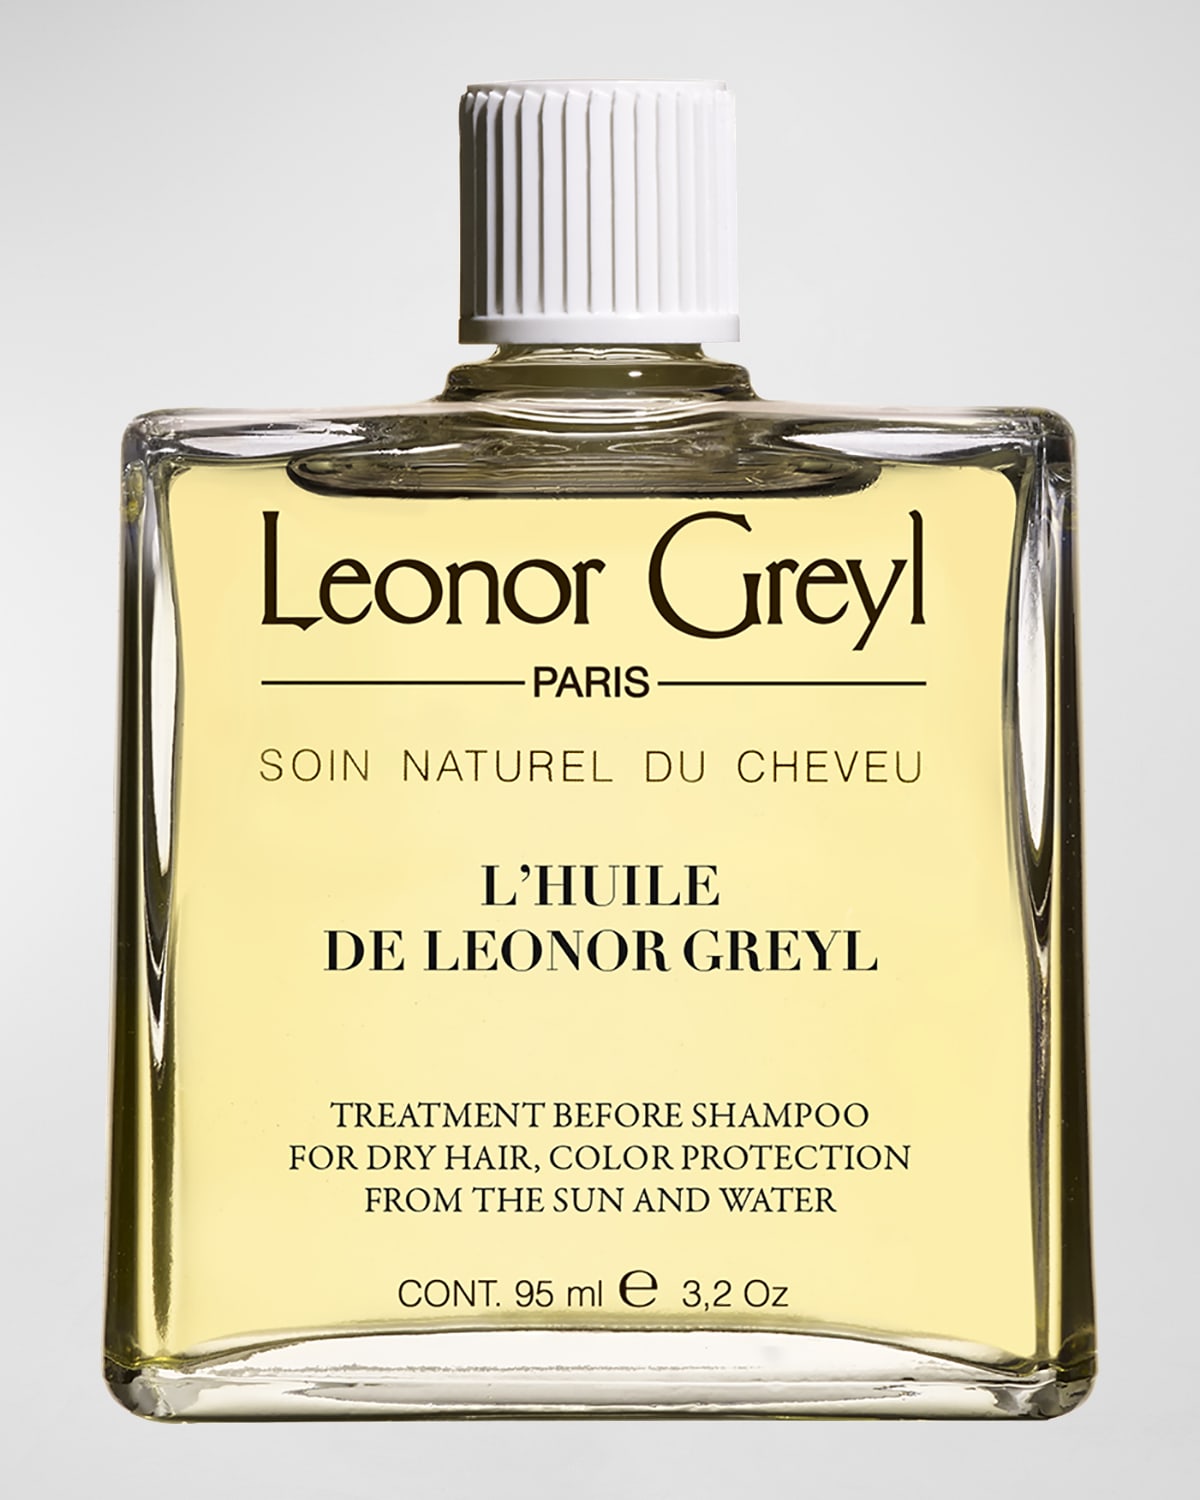 Leonor Greyl Huile de Leonor Greyl (Color Protecting Pre-Shampoo Treatment for Dry Hair), 3.2 oz./ 95 mL